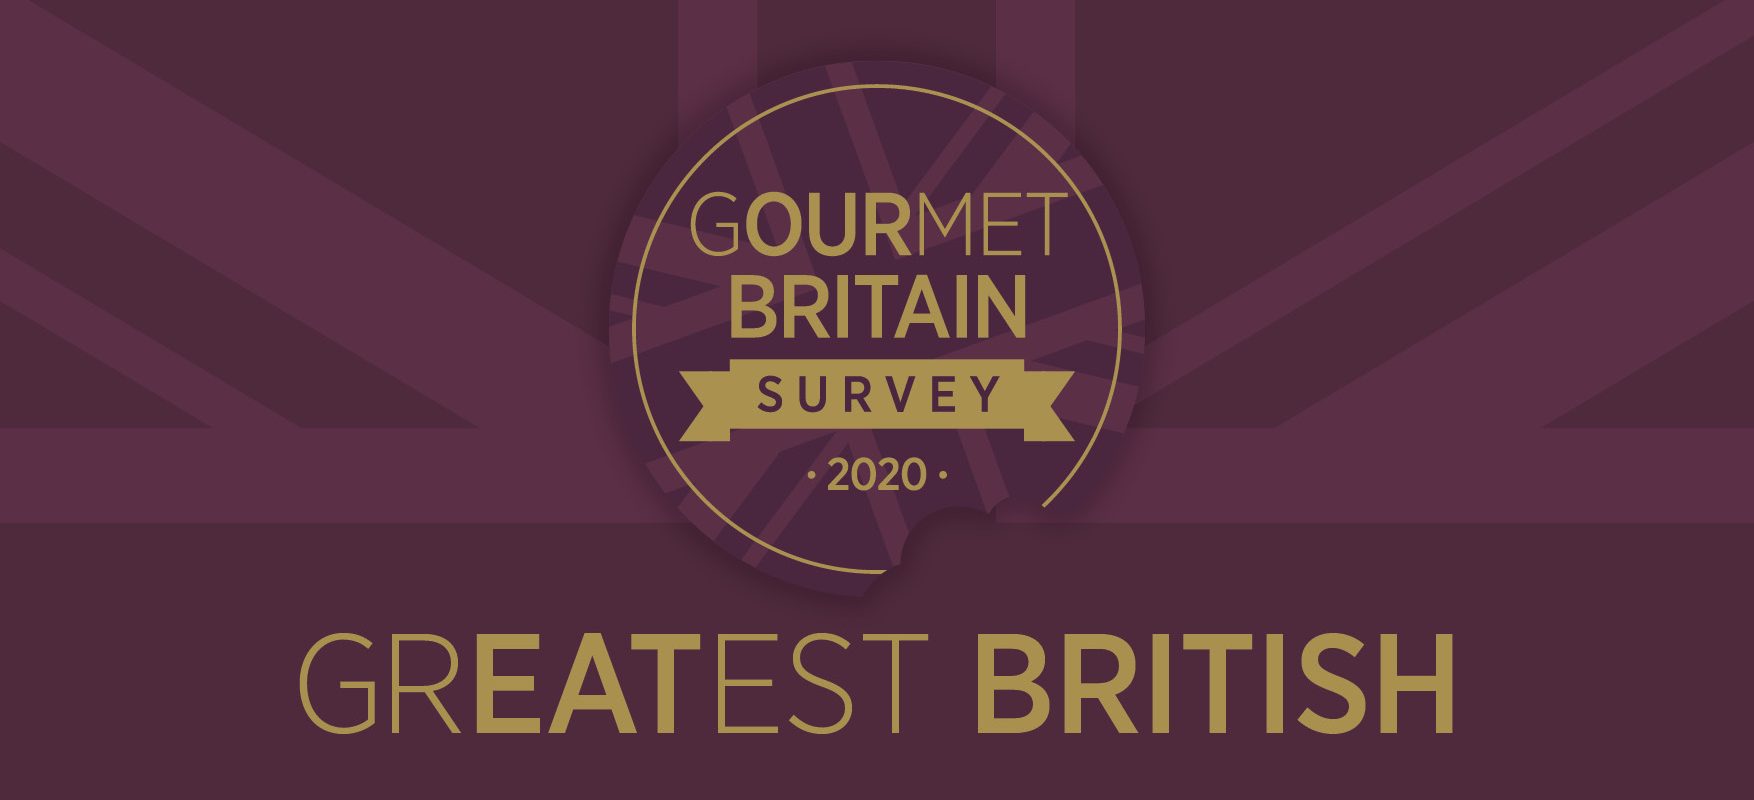 Gourmet Britain Hospitality industry Survey